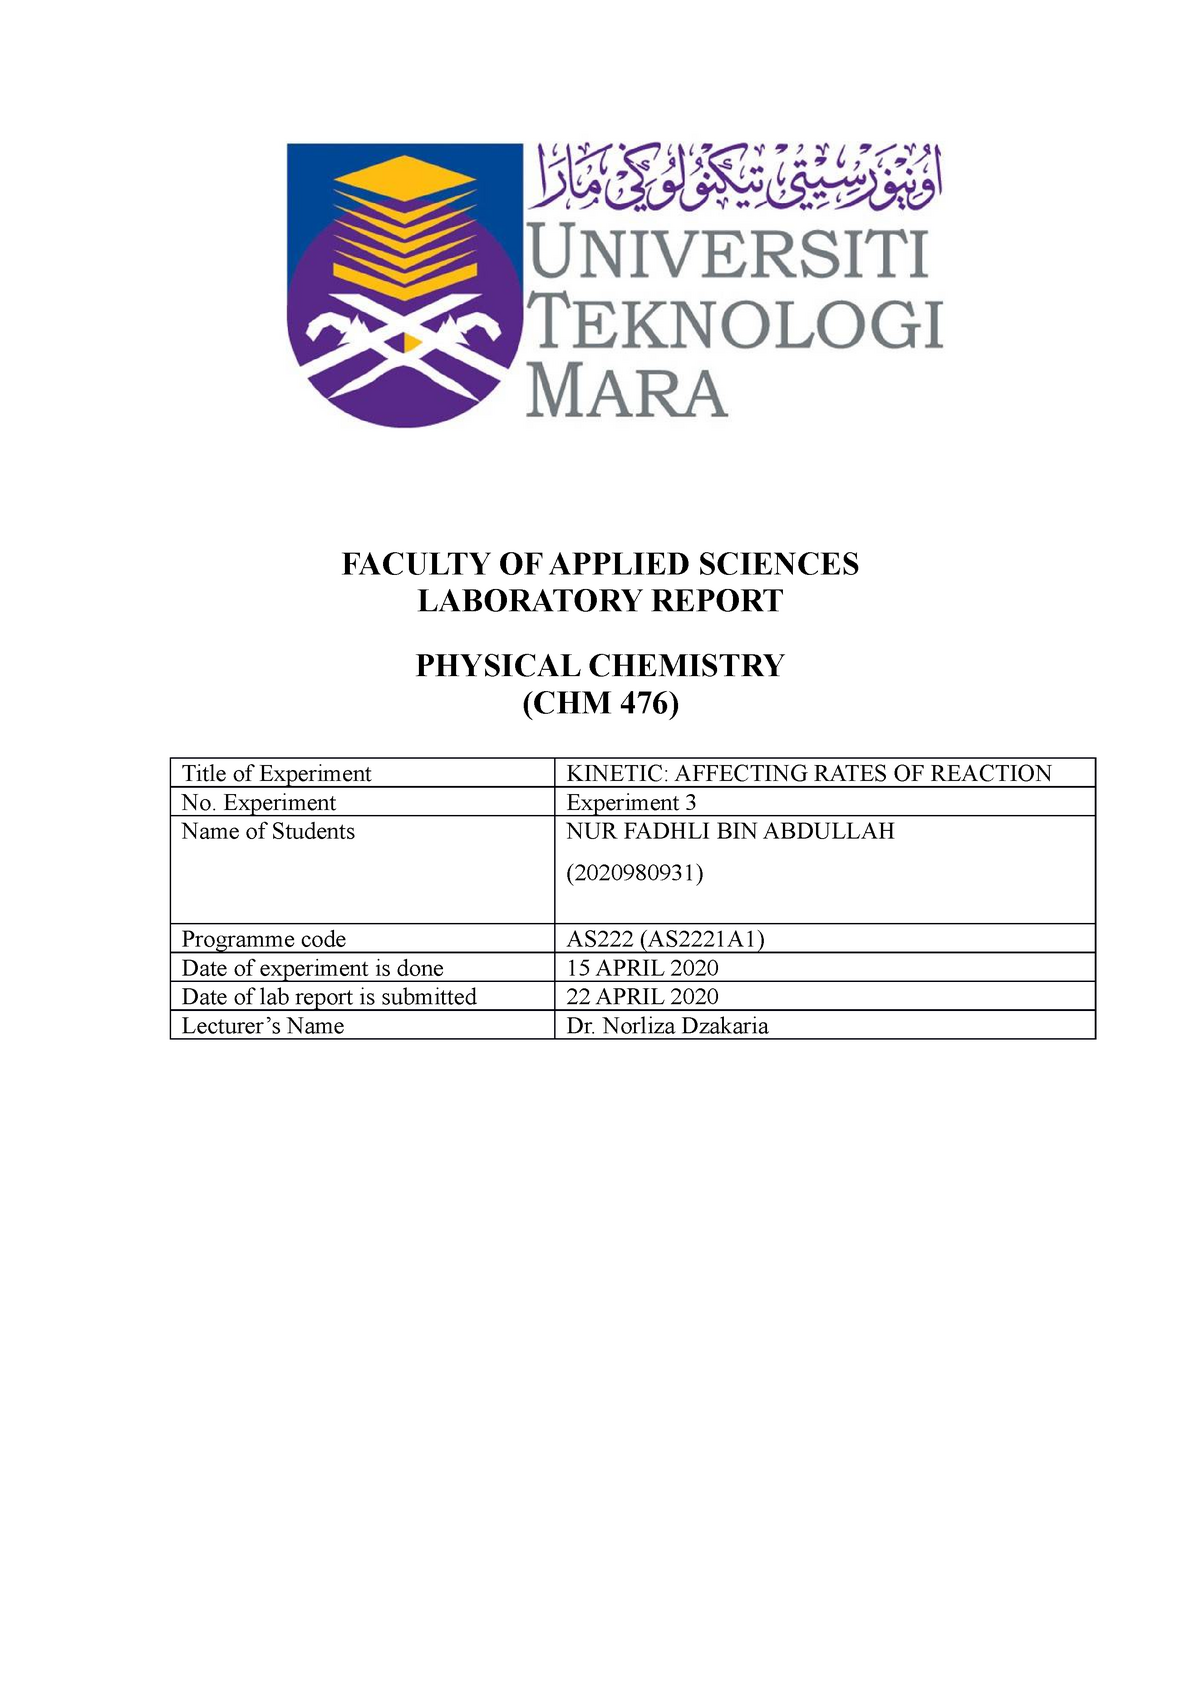 Lab report chemistry matriculation